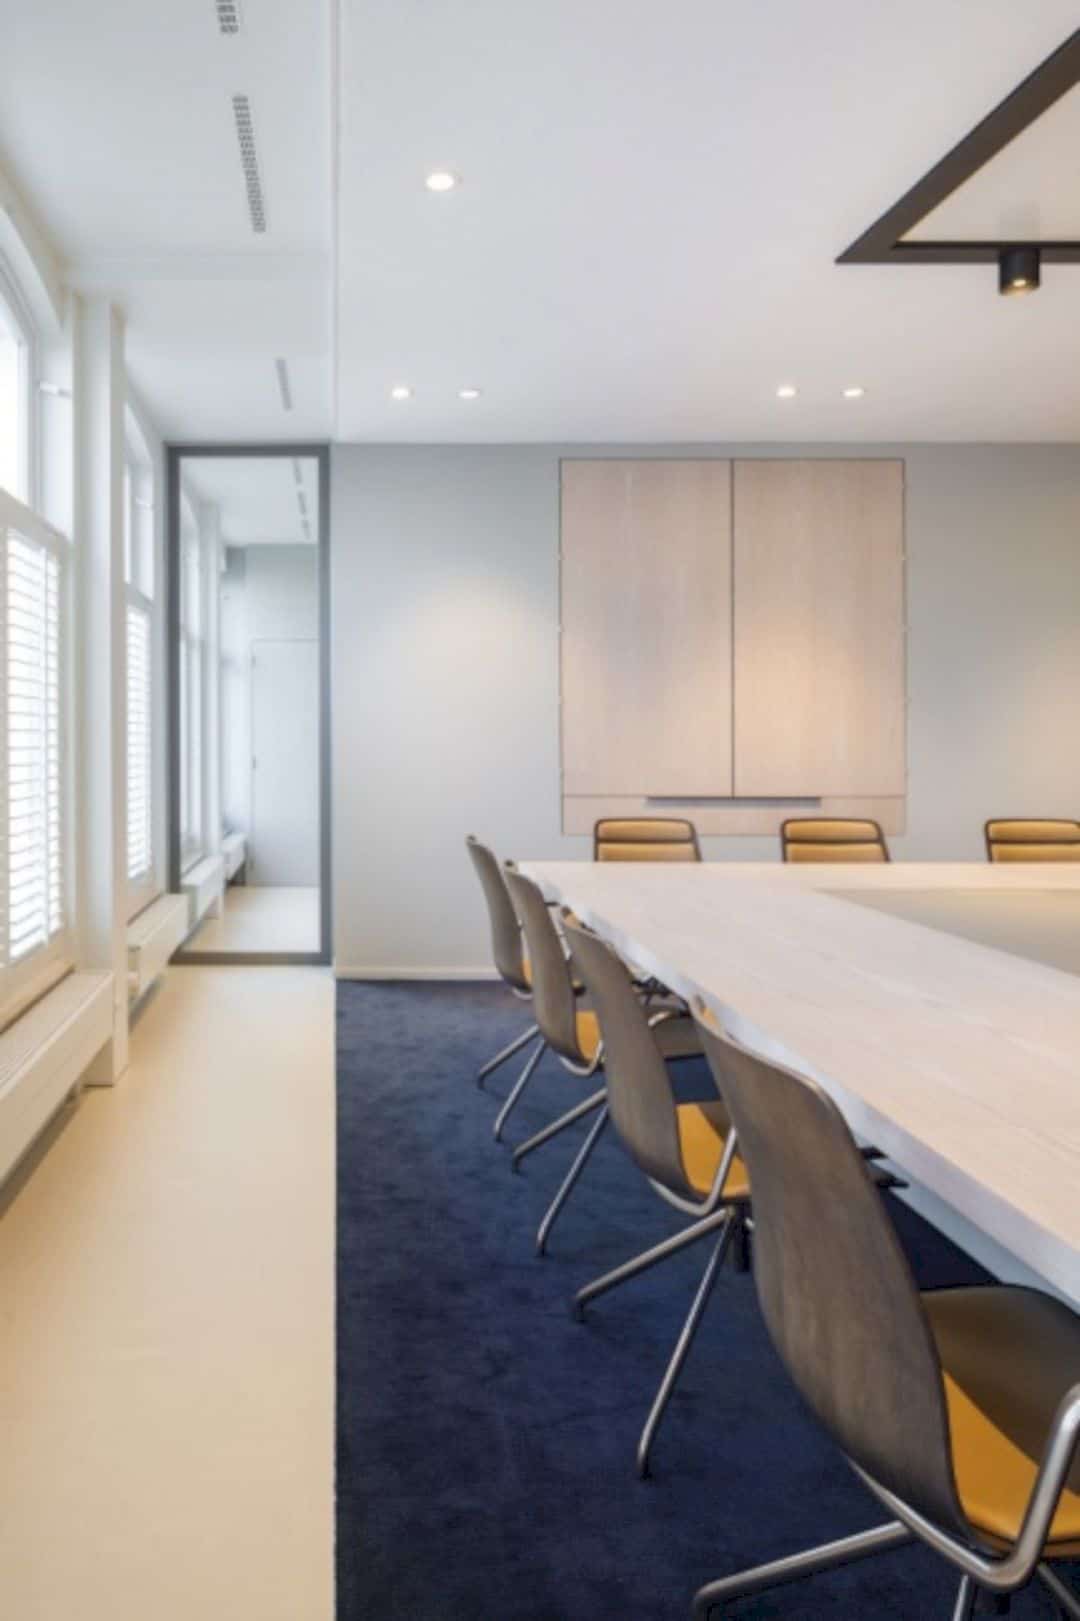 Ten Holter Noordam Advocaten A Contemporary And Communicative Work Environment Adopting Pragmatic Design 6